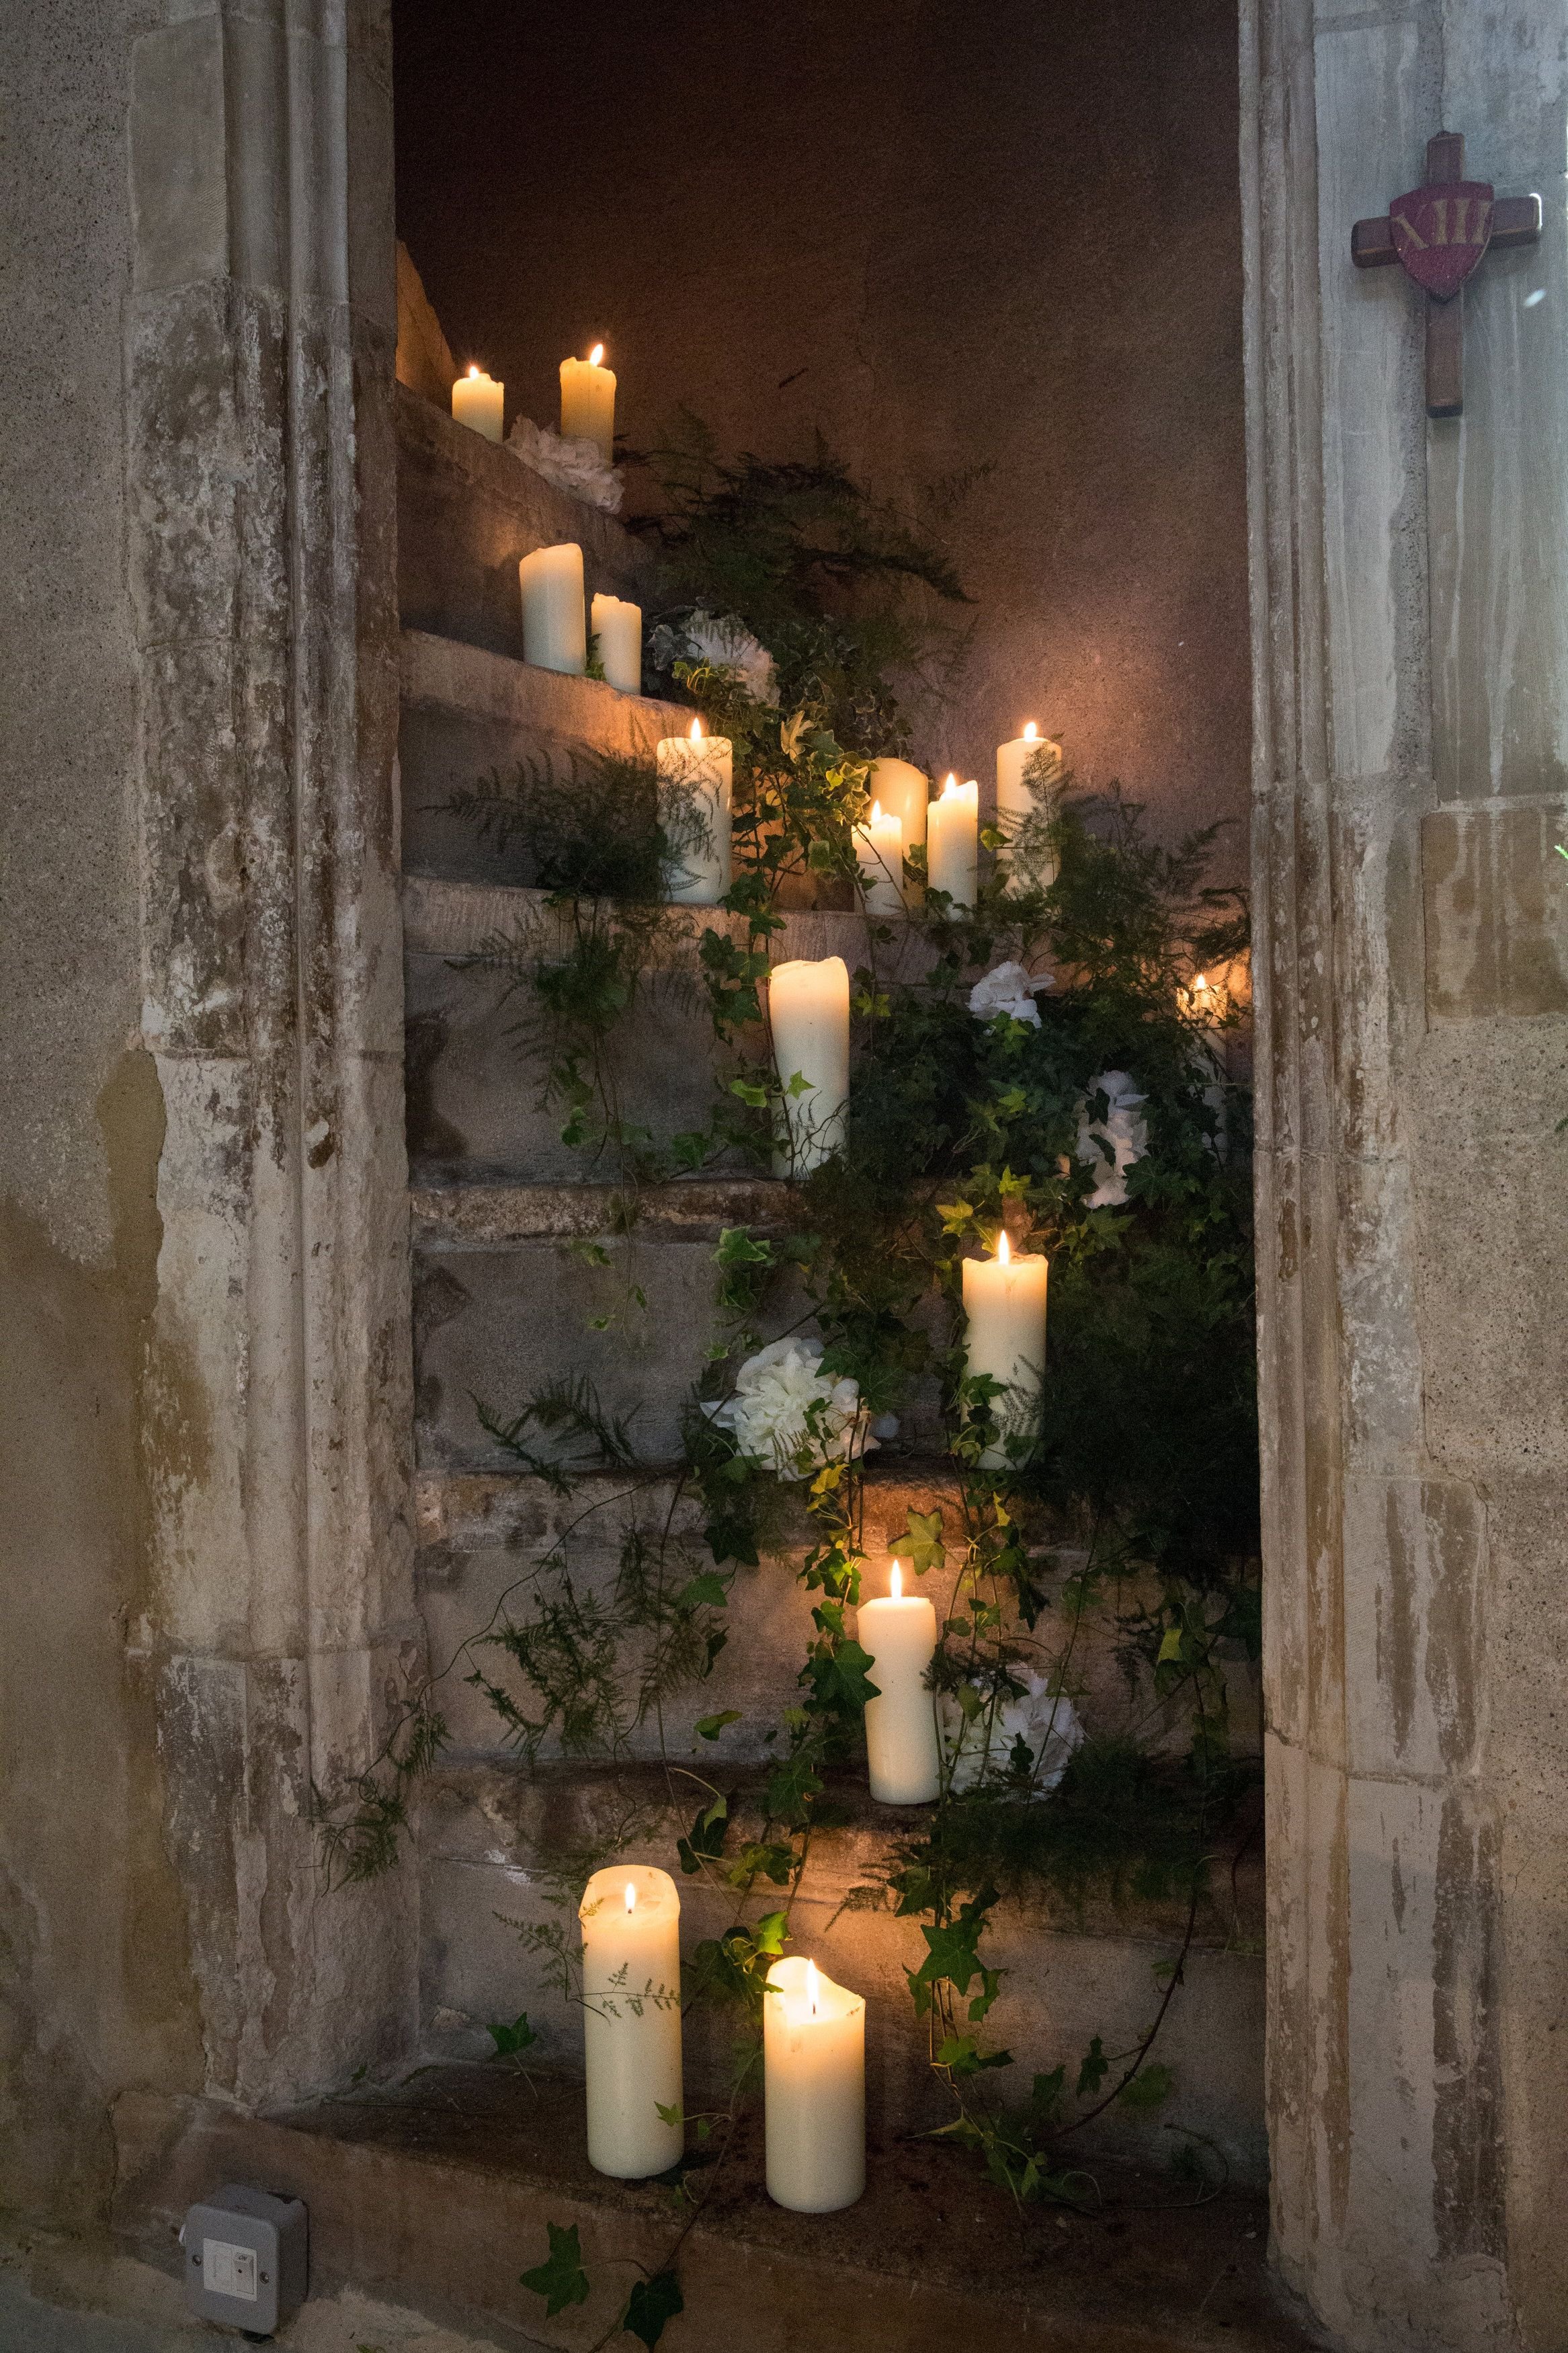 #flowers #dottiephotography #churchwedding #wedding #church #hengravehall #hengravechurch #candles #candlelit #stairs.jpeg